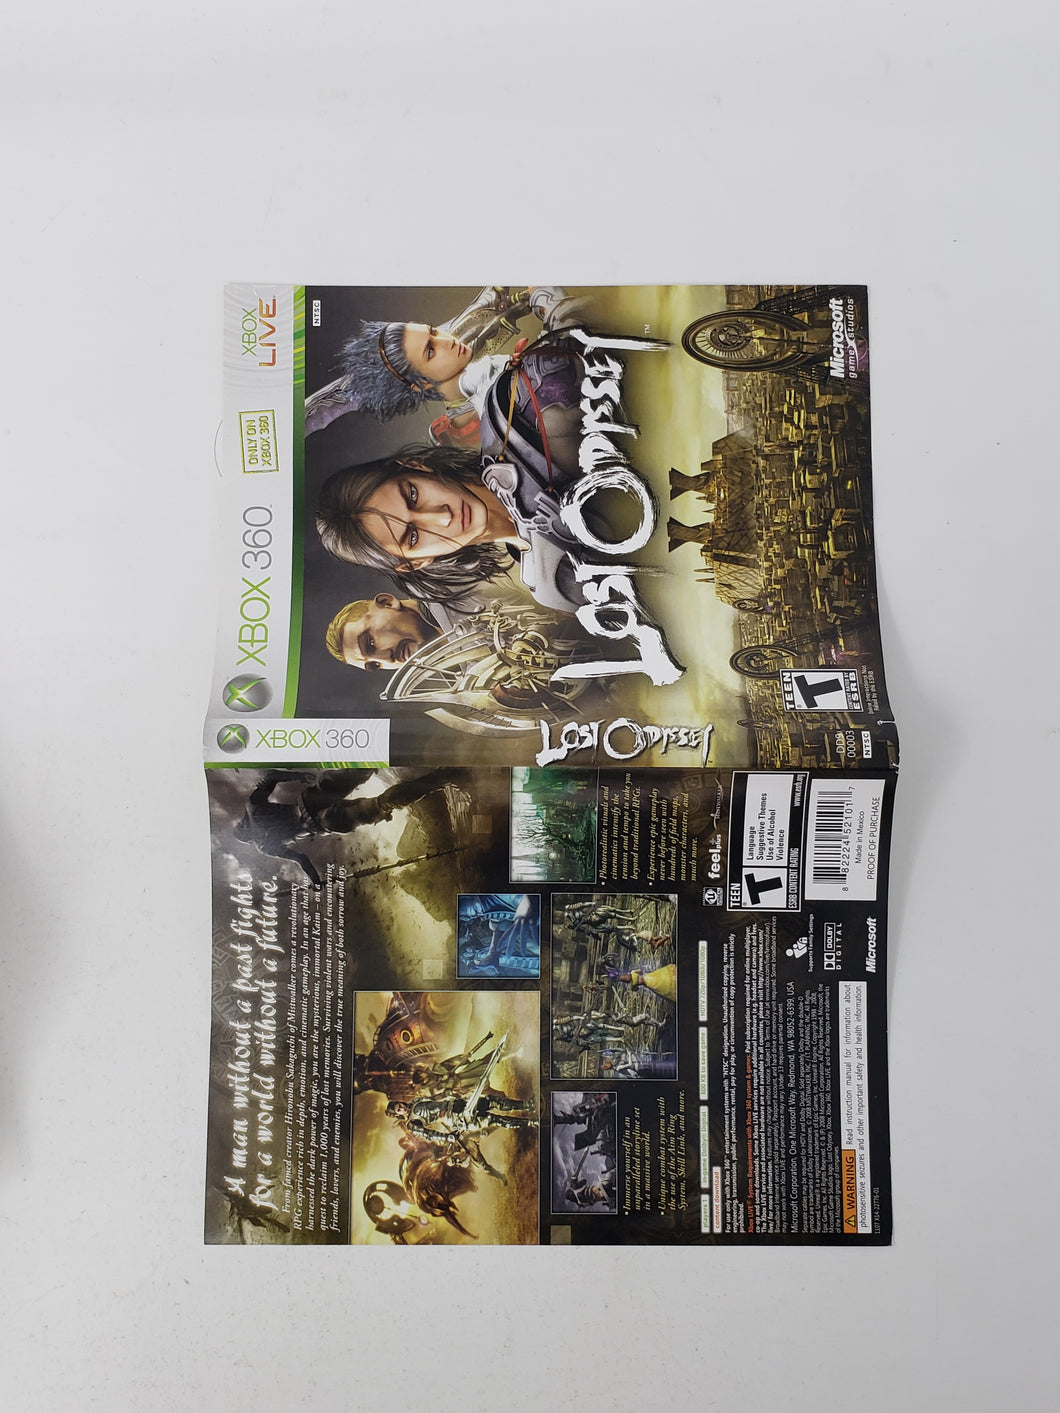 Lost Odyssey [Cover art] - Microsoft XBOX360